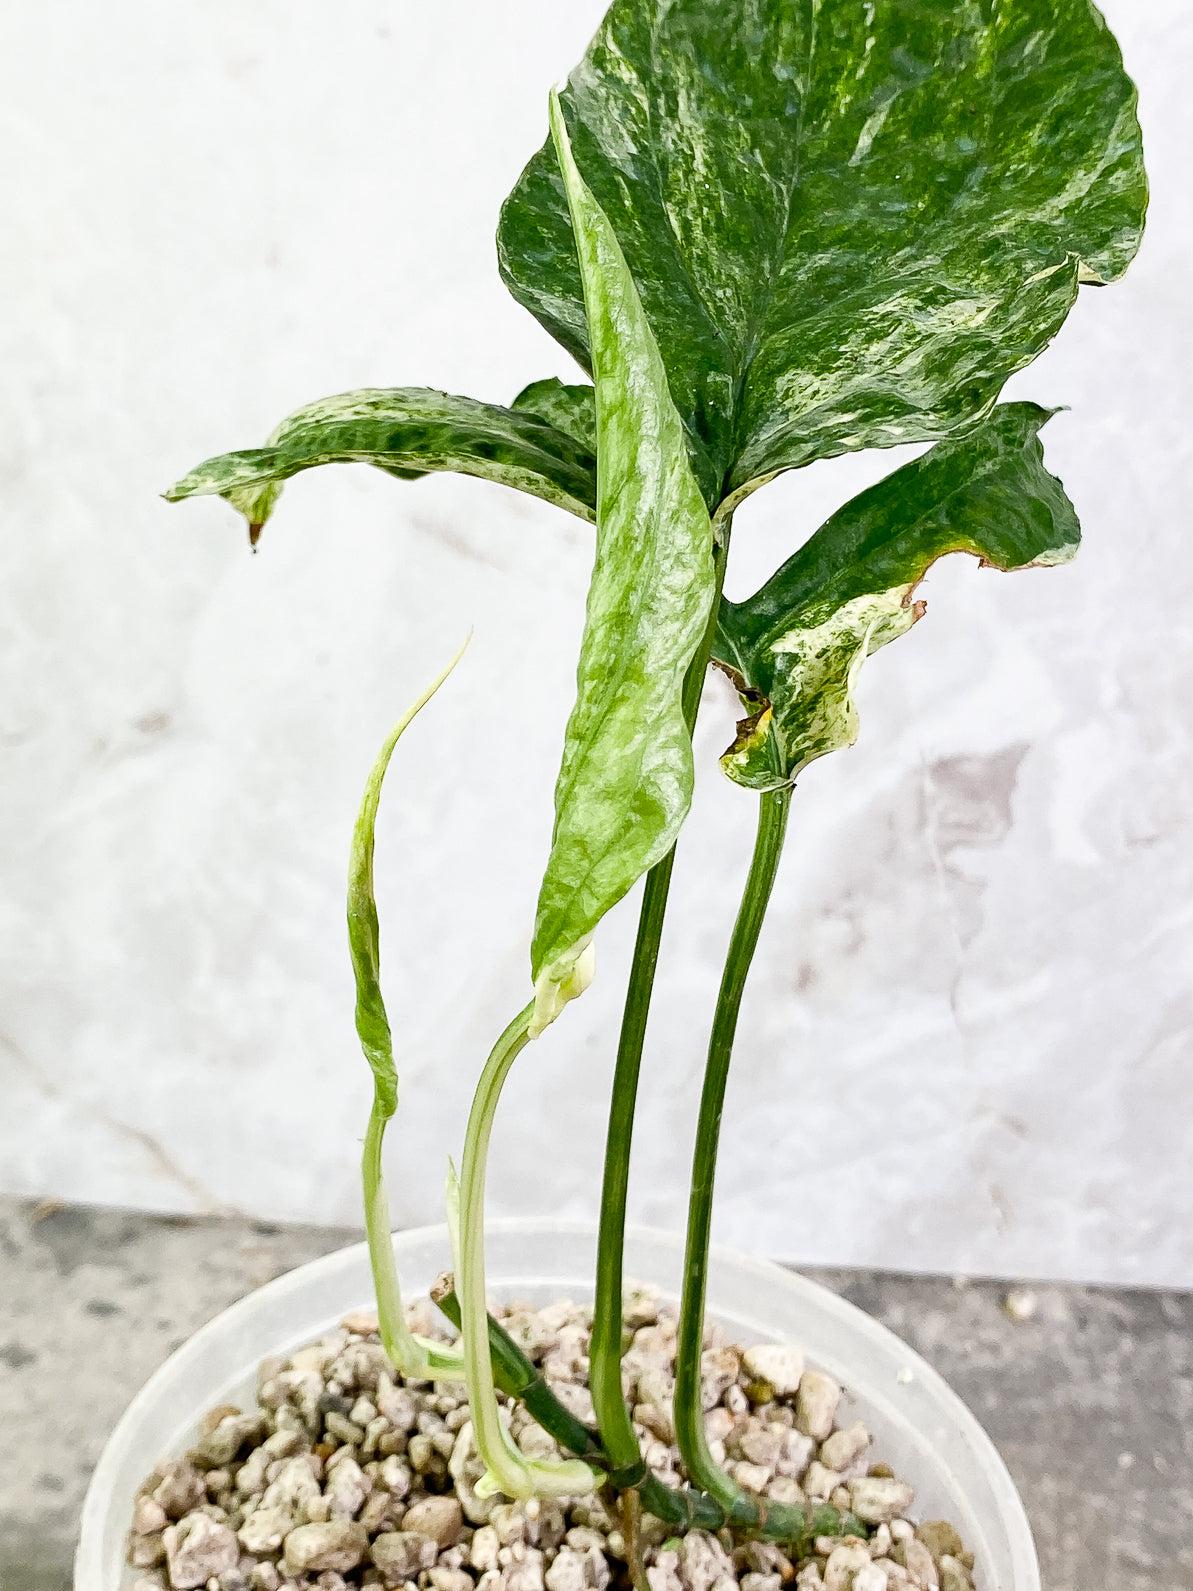 Amydrium Medium Variegated 2 leaves 1 unfurling leaf 1 sprout slightly rooted